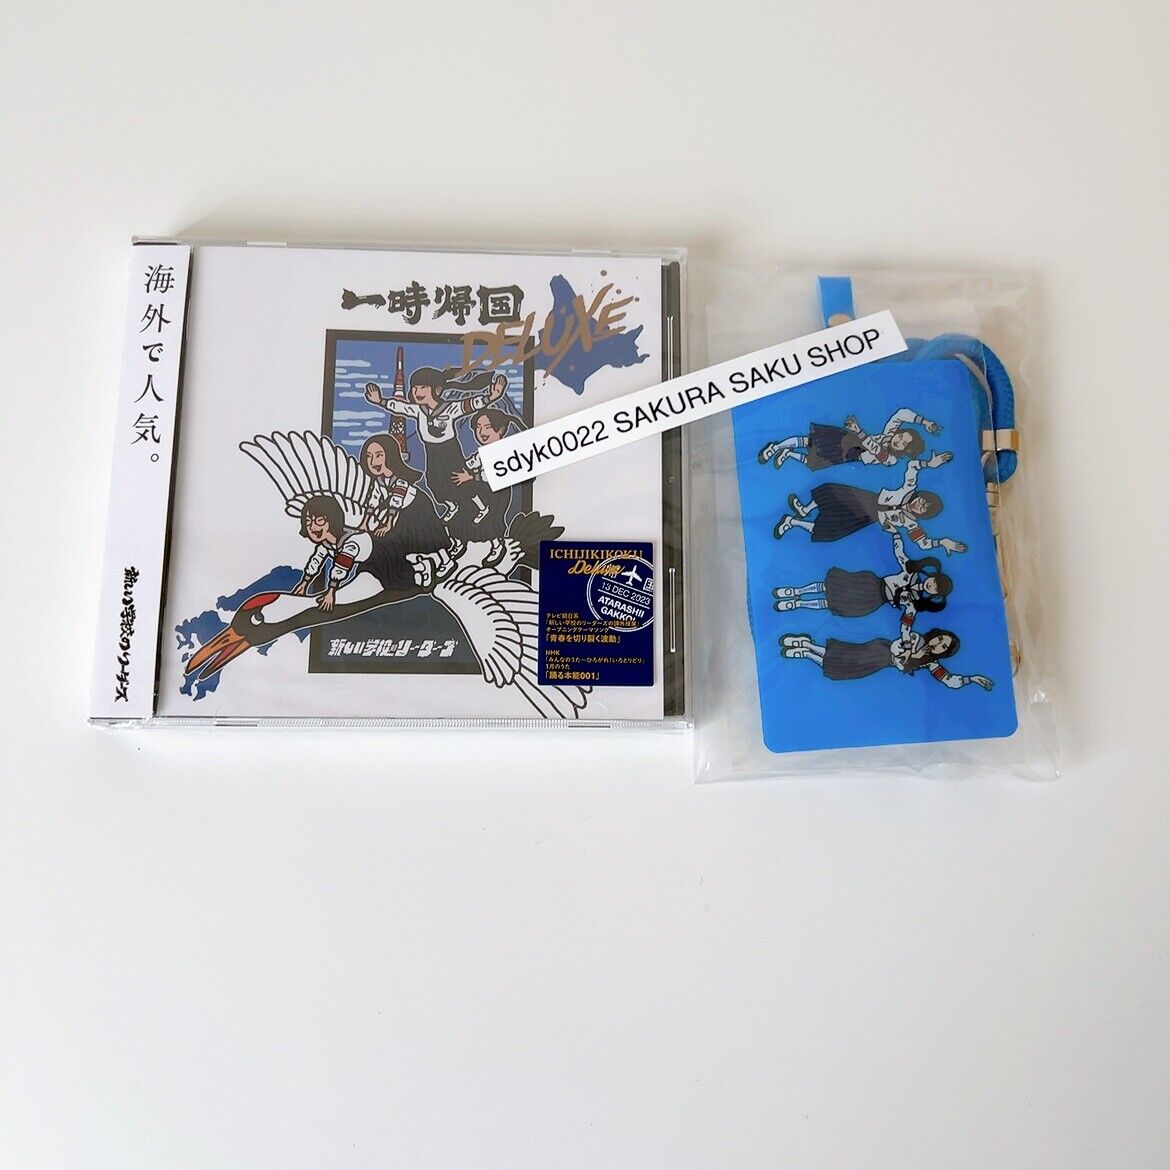 ATARASHII GAKKO ICHIJIKIKOKU DELUXE CD w/ Limited Phone Tab AGTAT-0002 